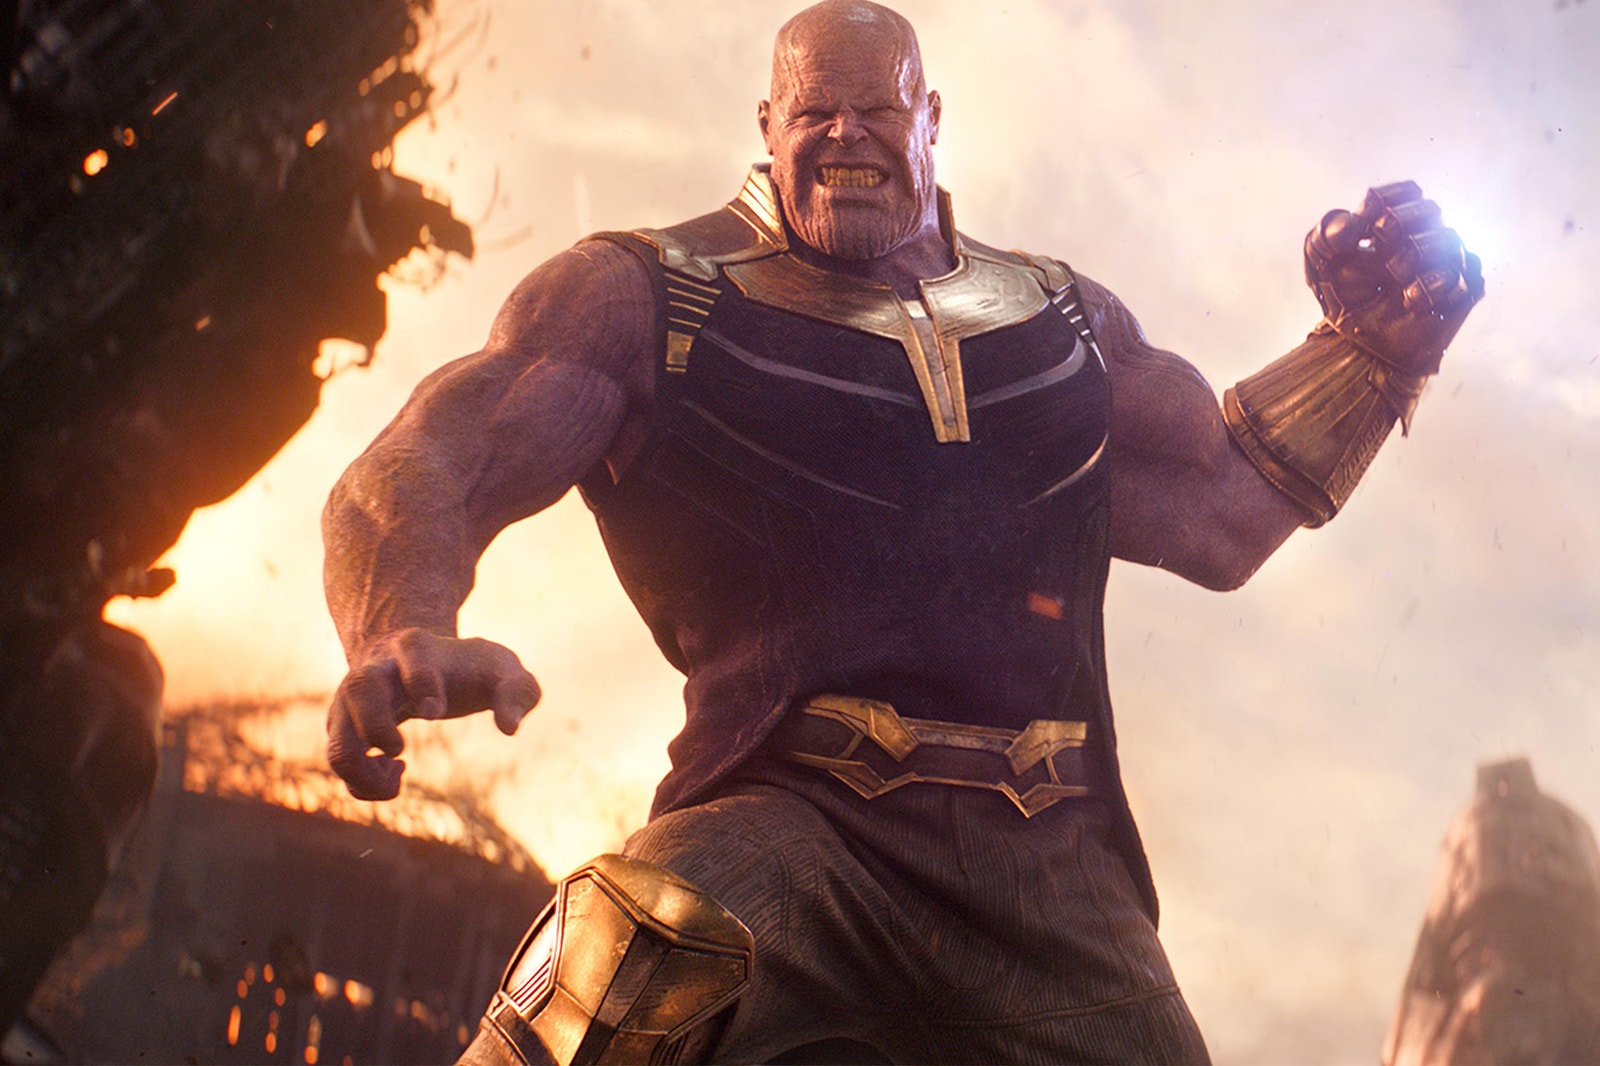 Avengers Endgame Trailer 2 Breakdown Iron Man Captain America Captain Marvel Thanos Joe Russo Anthony Russo The Russo Brothers Marvel Studios Kevin Feige